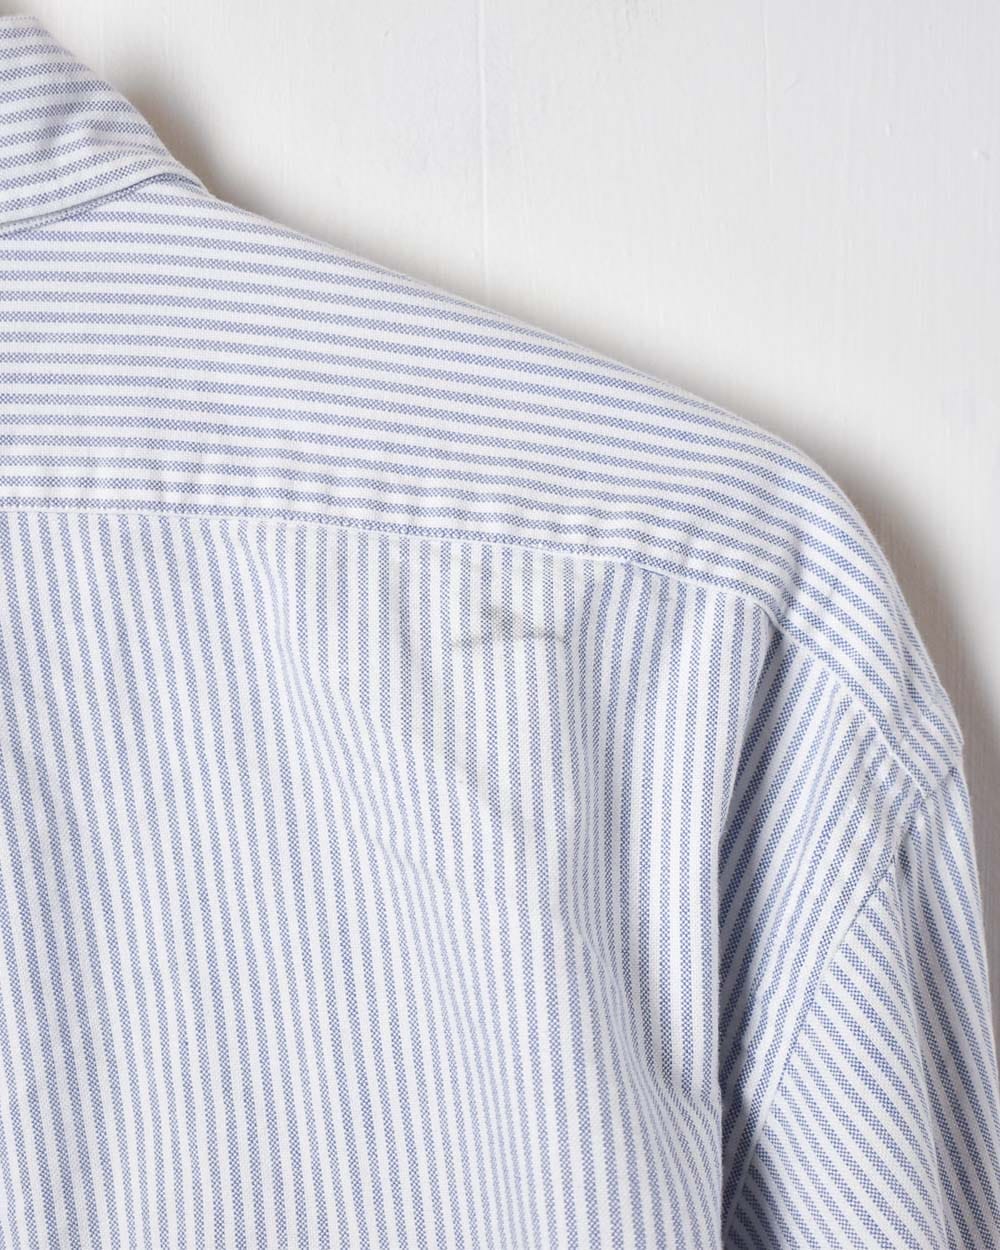 BabyBlue Polo Ralph Lauren Yarmouth Striped Shirt - Large